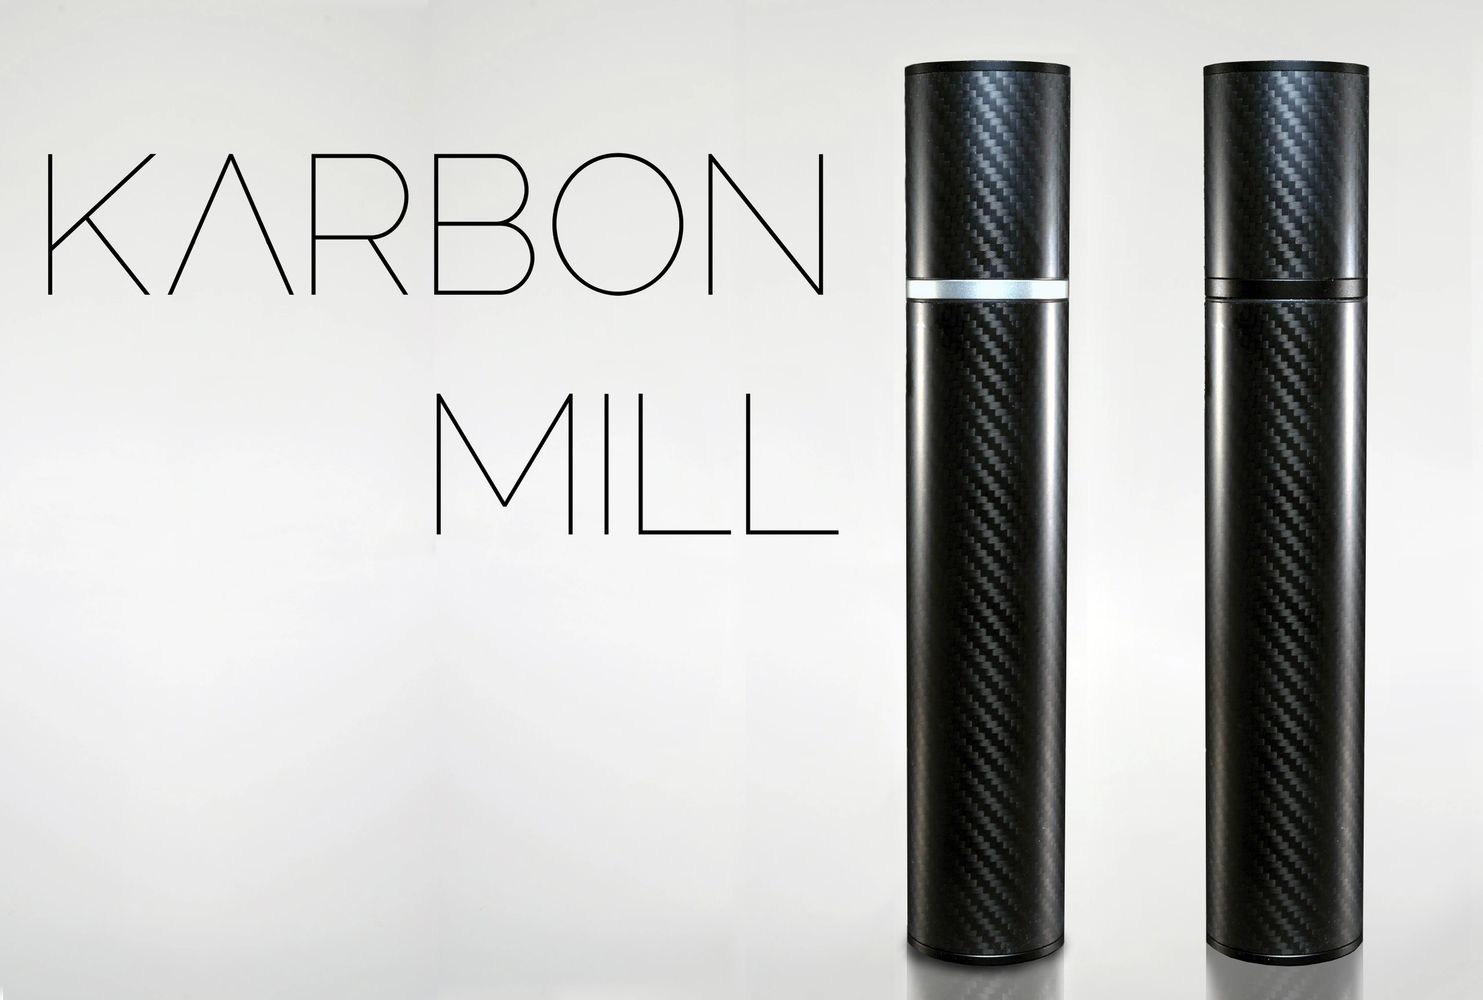 Karbon mill set